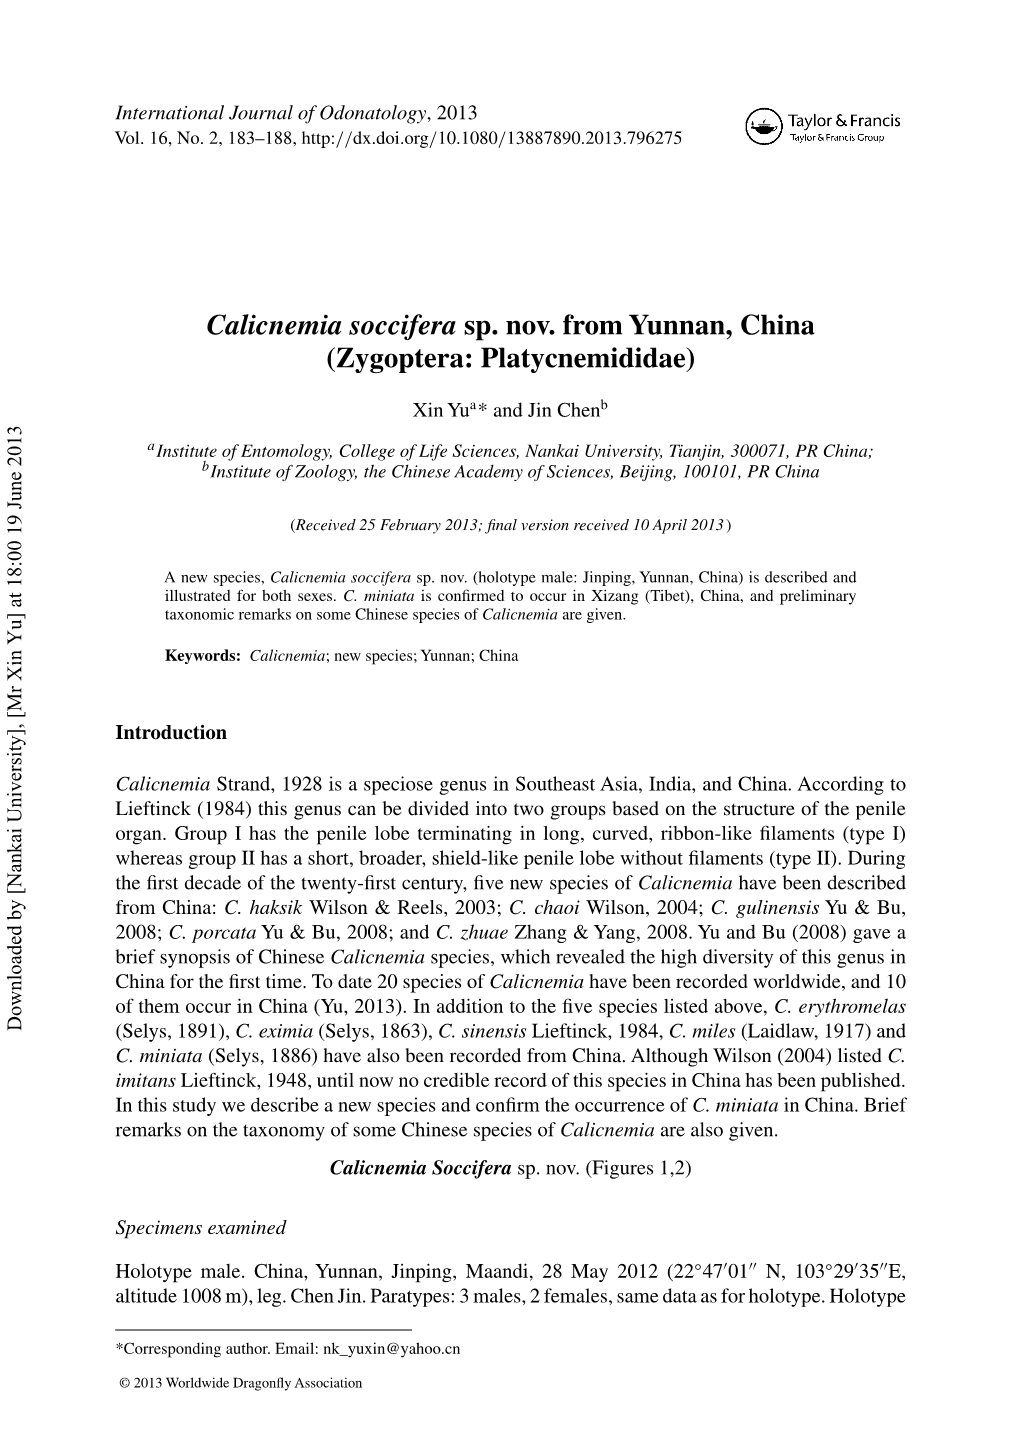 Calicnemia Soccifera Sp. Nov. from Yunnan, China (Zygoptera: Platycnemididae)